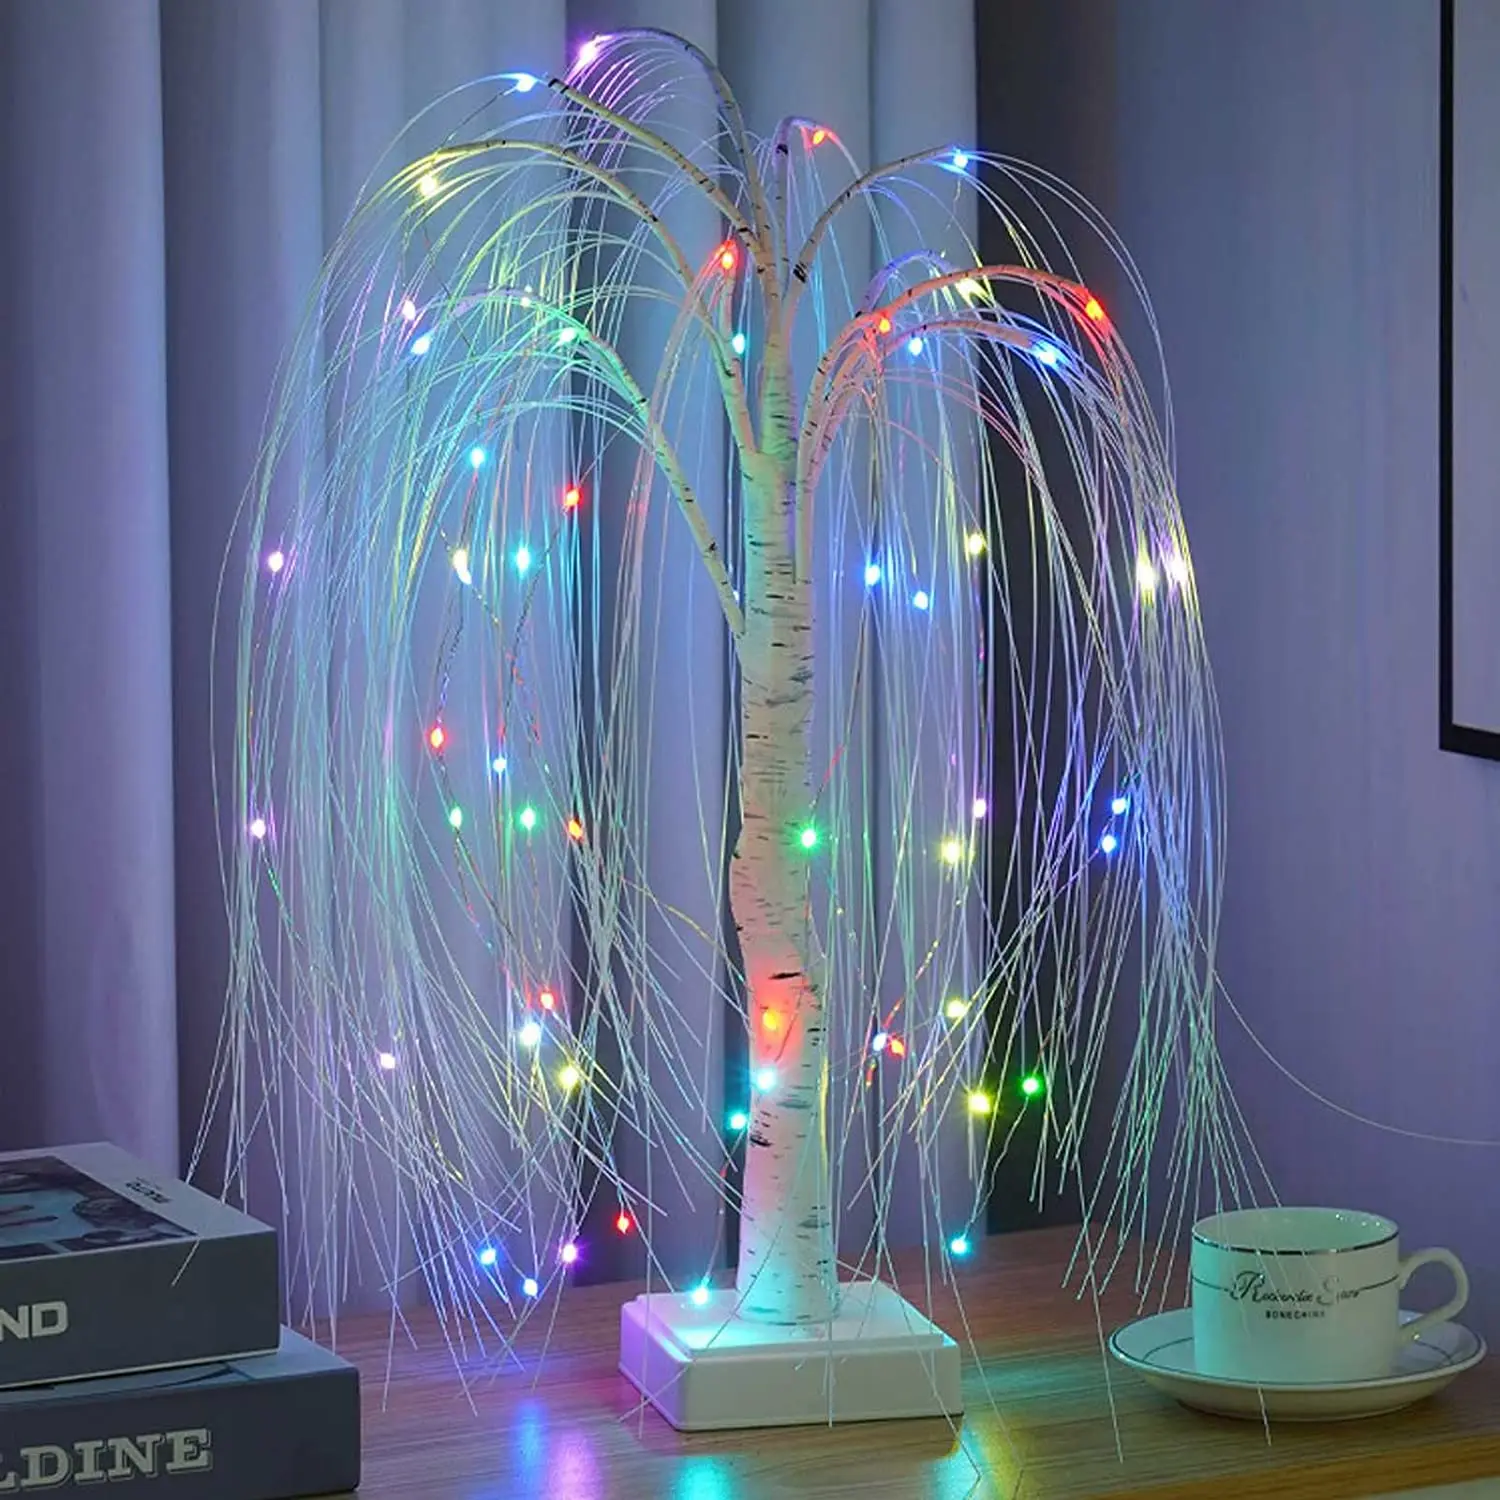 

LED RGB Willow Night Light Remote Control Gypsophila Tree Table Lamp For Home Bedroom Wedding Christmas Indoor Decor Nightlights